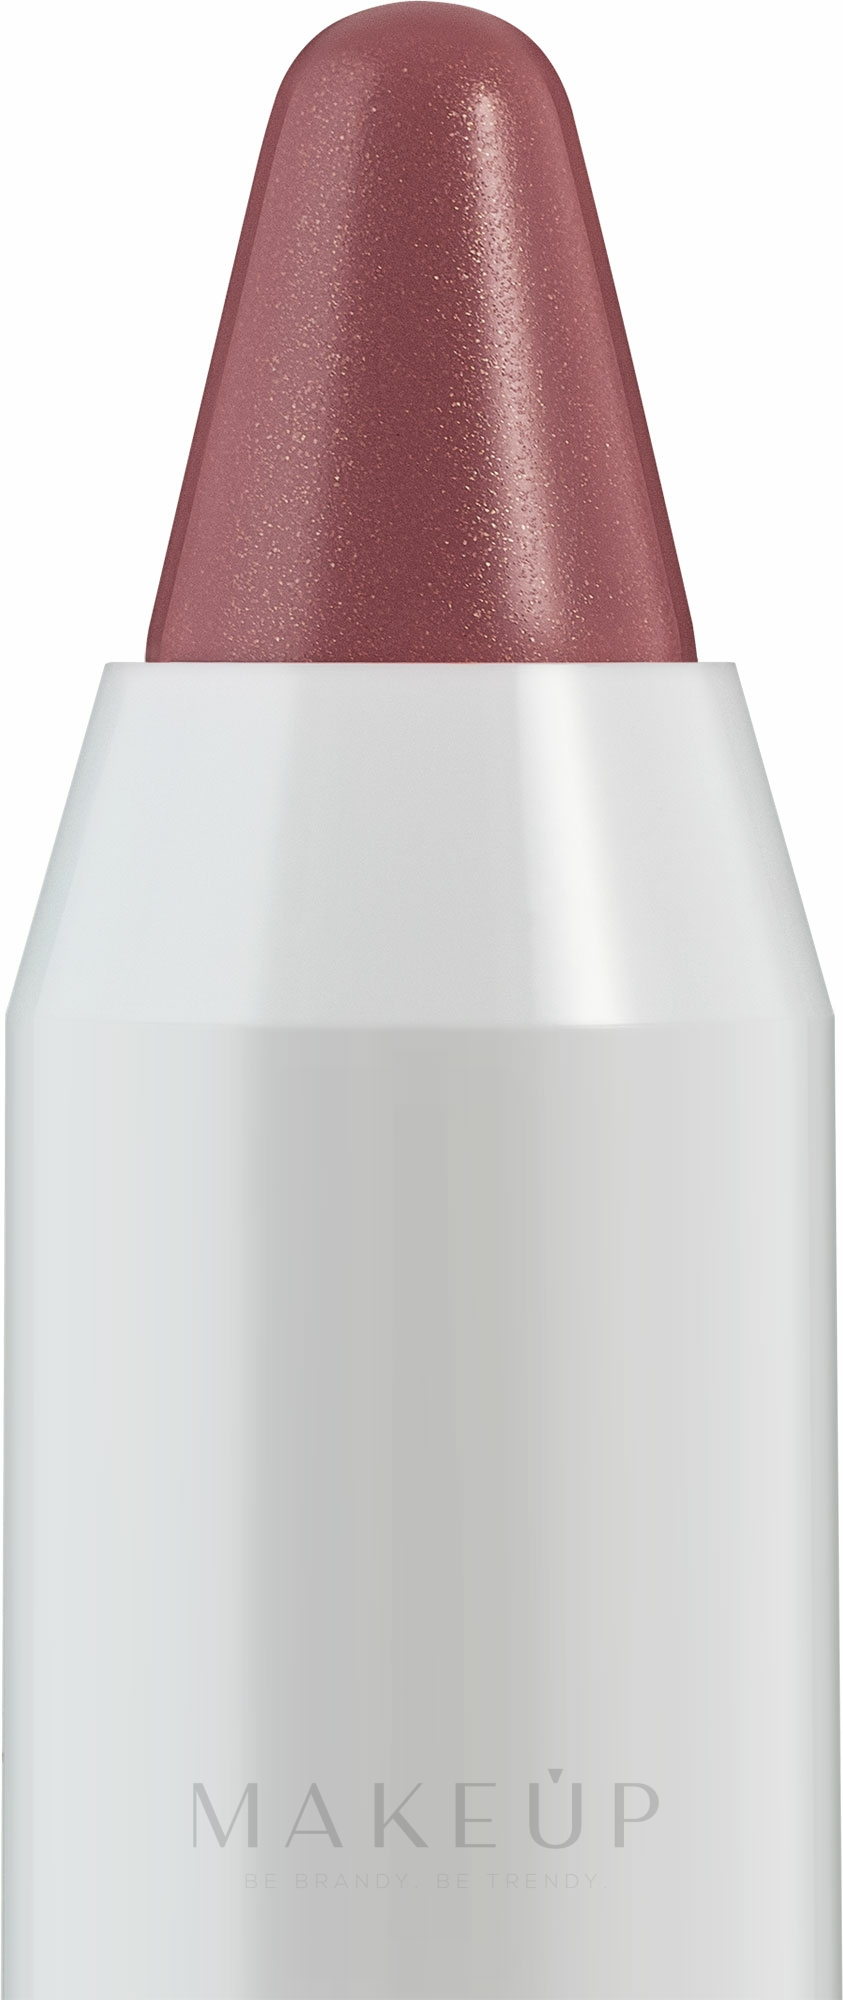 Farbiger Lippenbalsam - Embryolisse Comfort Lip Balm — Bild Pink Nude